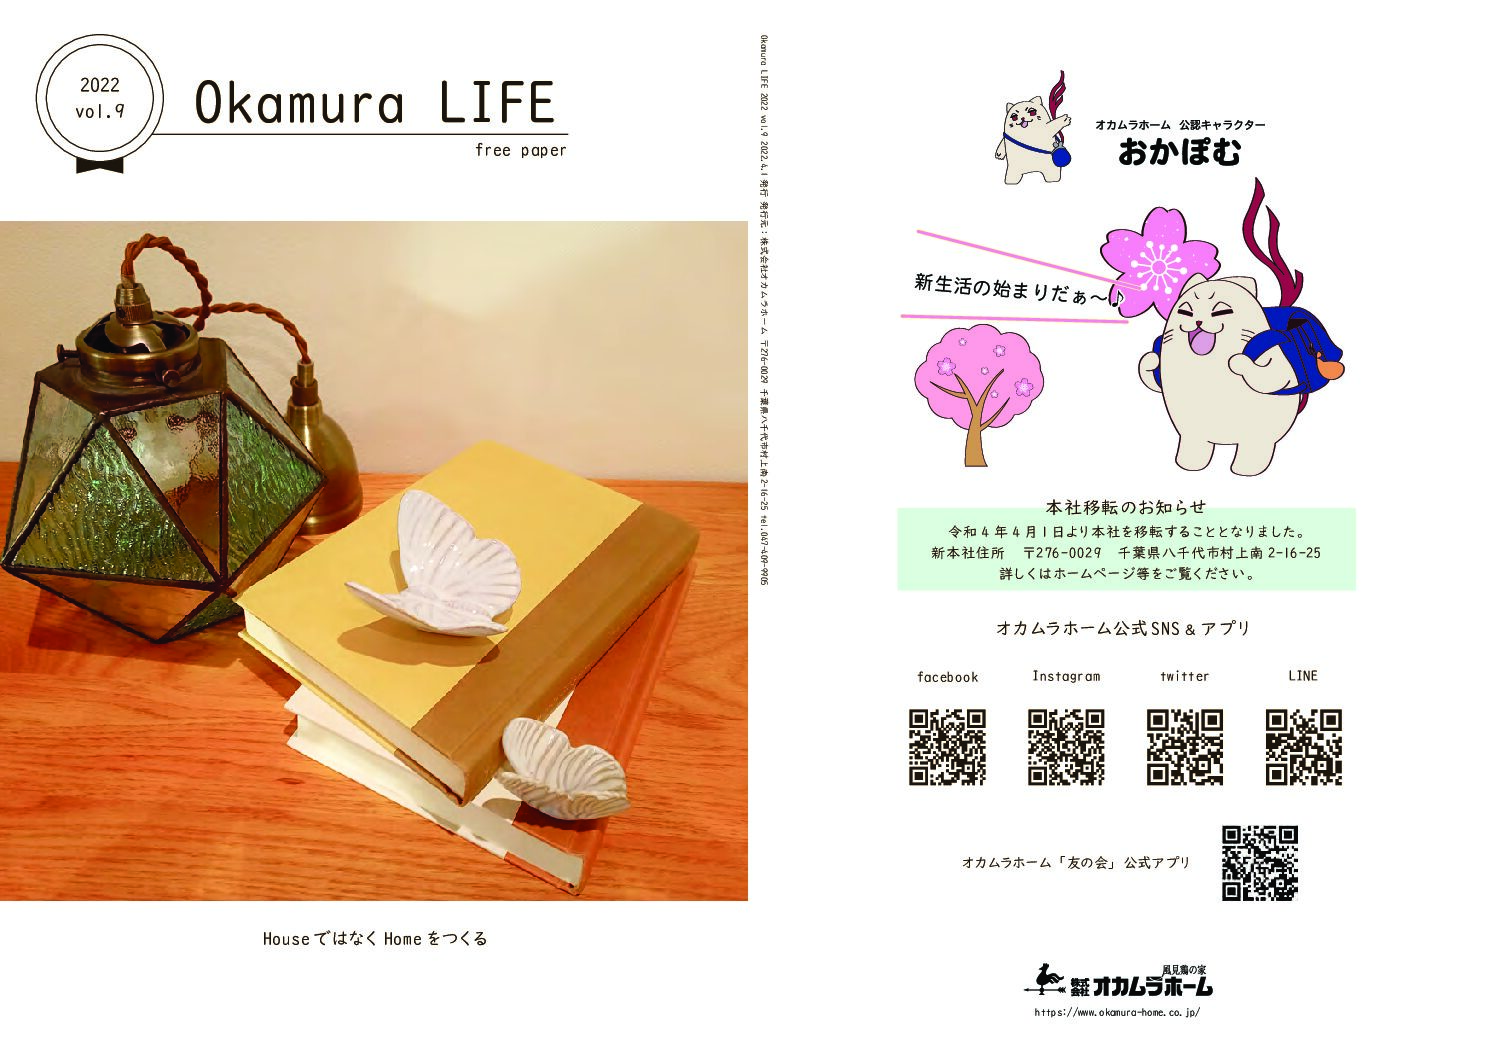 Okamura LIFE vol.9